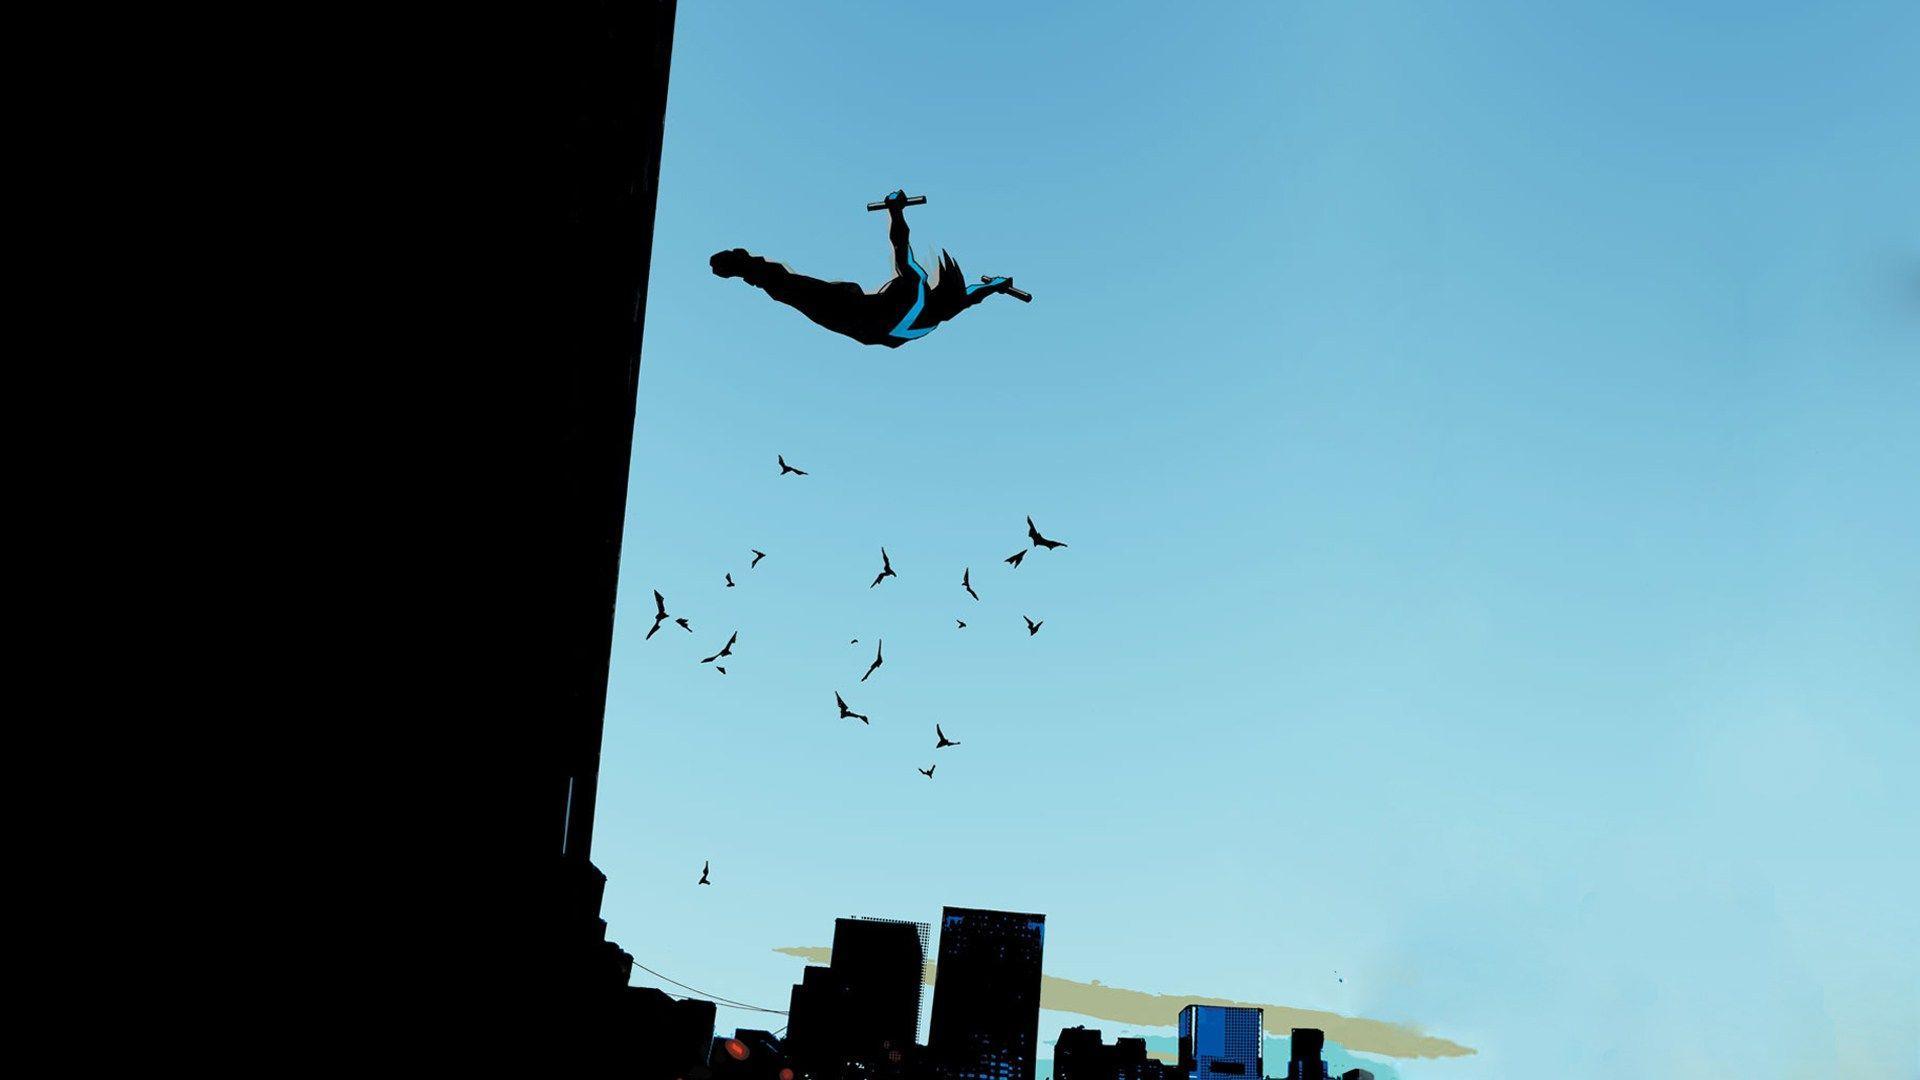 DC, Nightwing (Dick Grayson), Superhero HD Wallpaper & Background